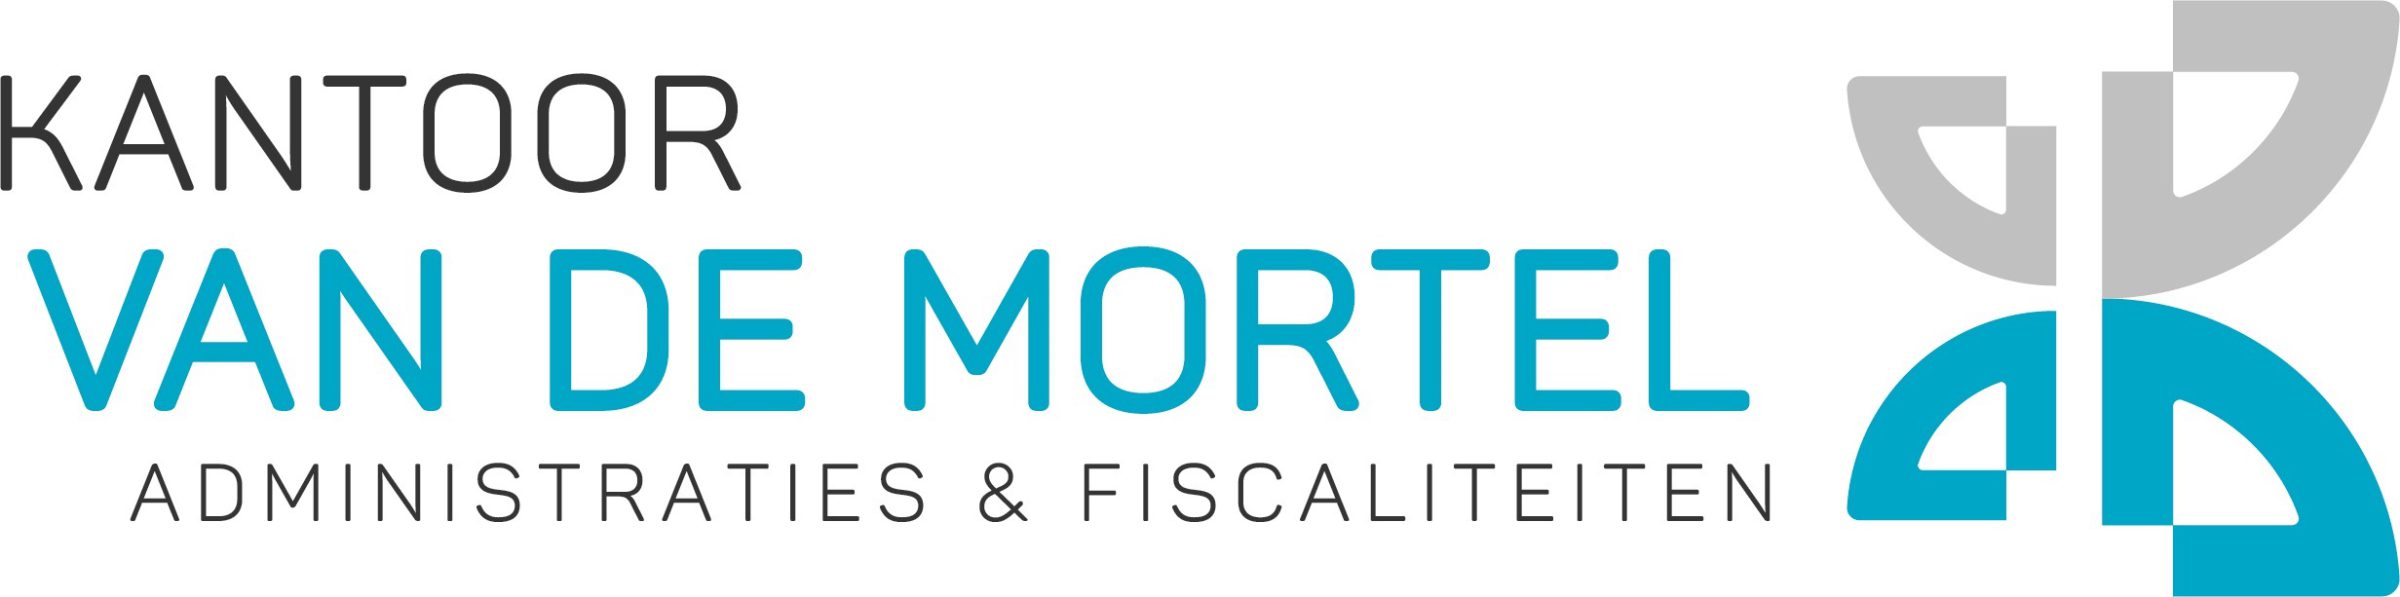 Kantoor van de Mortel, administrations & fiscalité, logo